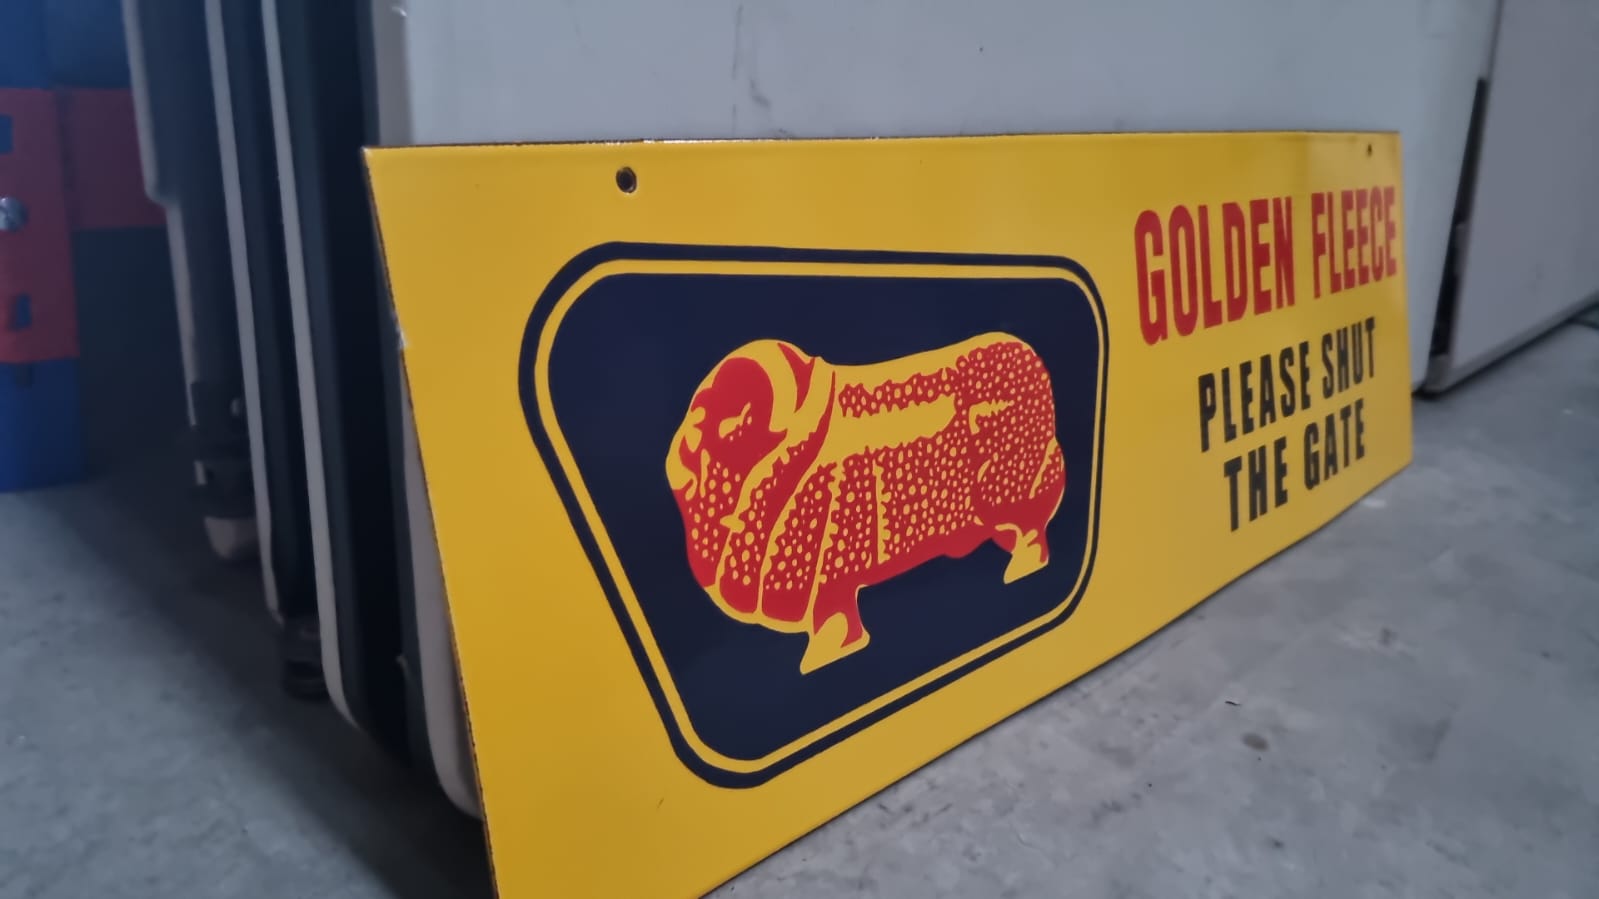 Golden Fleece - Please Shut The Gate - ( ESGF130 ) - Vintage World Australia - 2